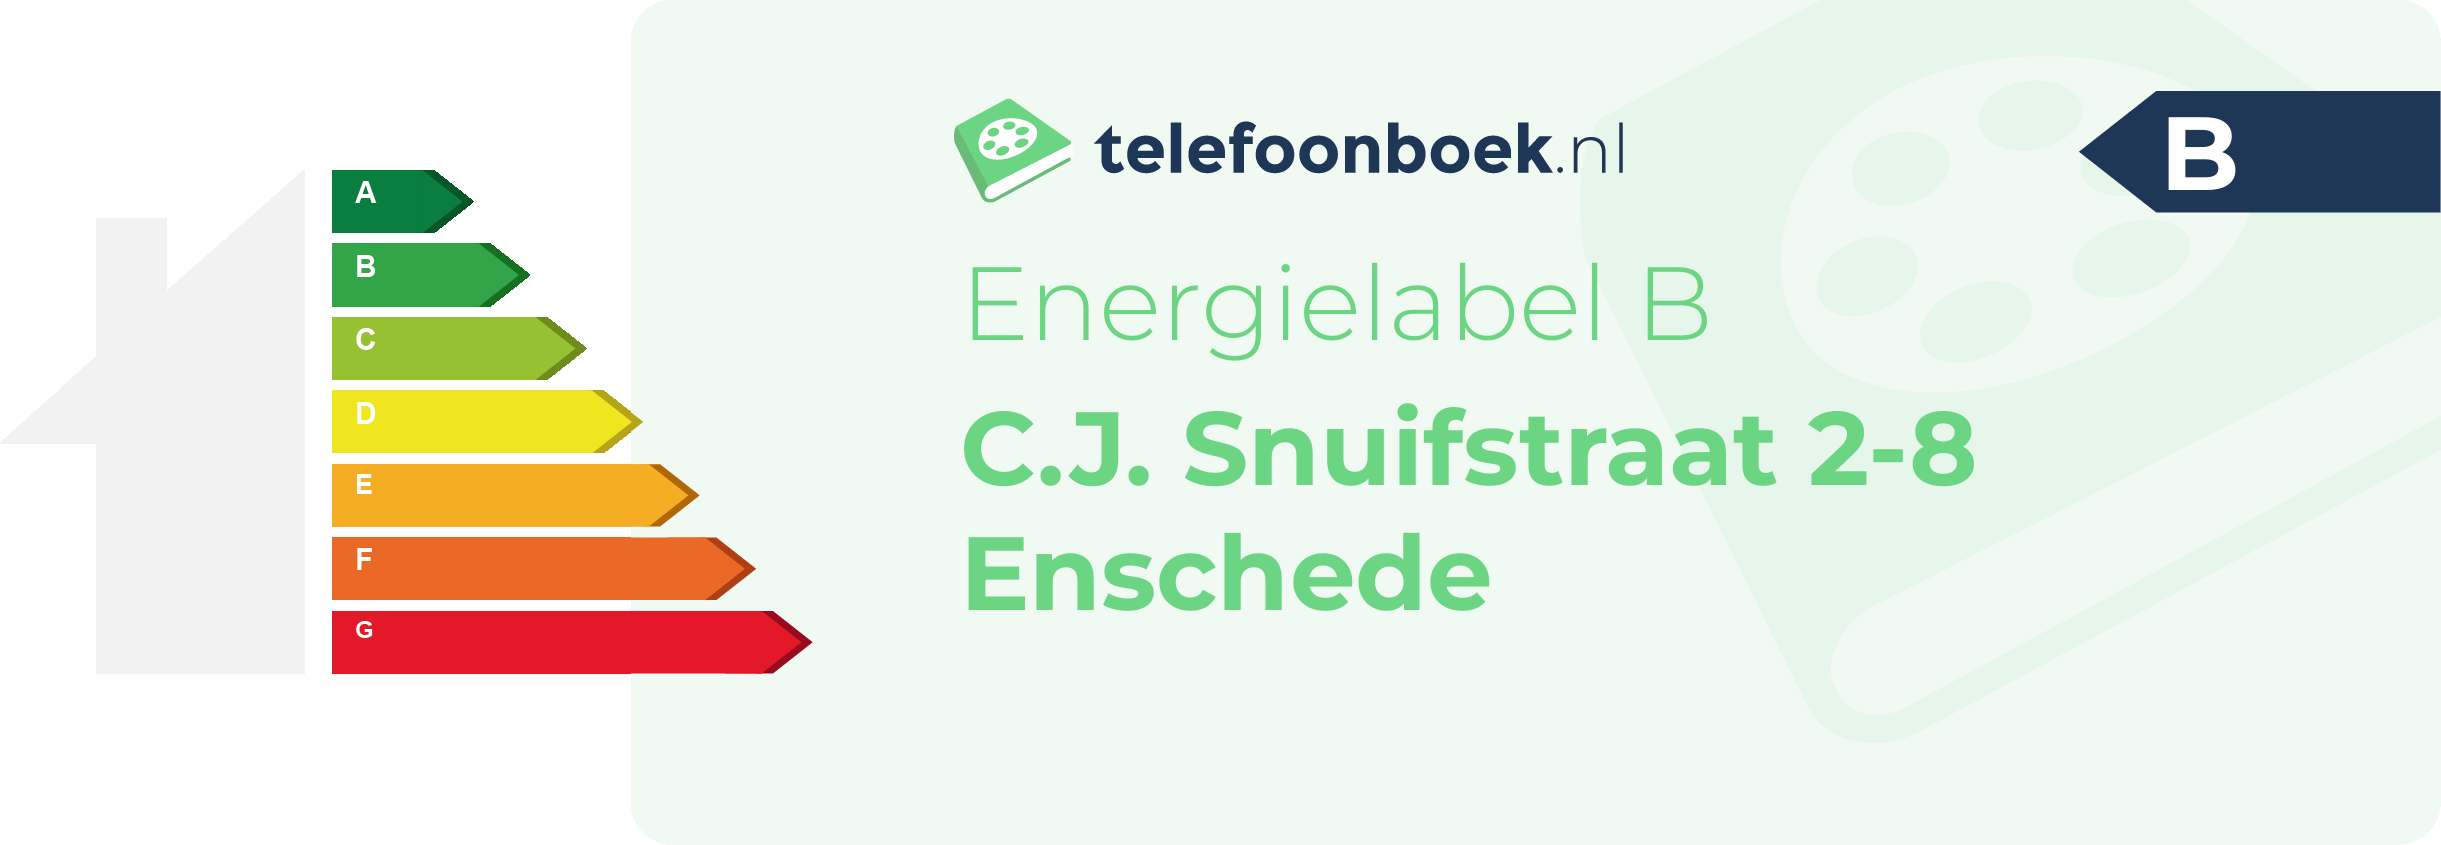 Energielabel C.J. Snuifstraat 2-8 Enschede